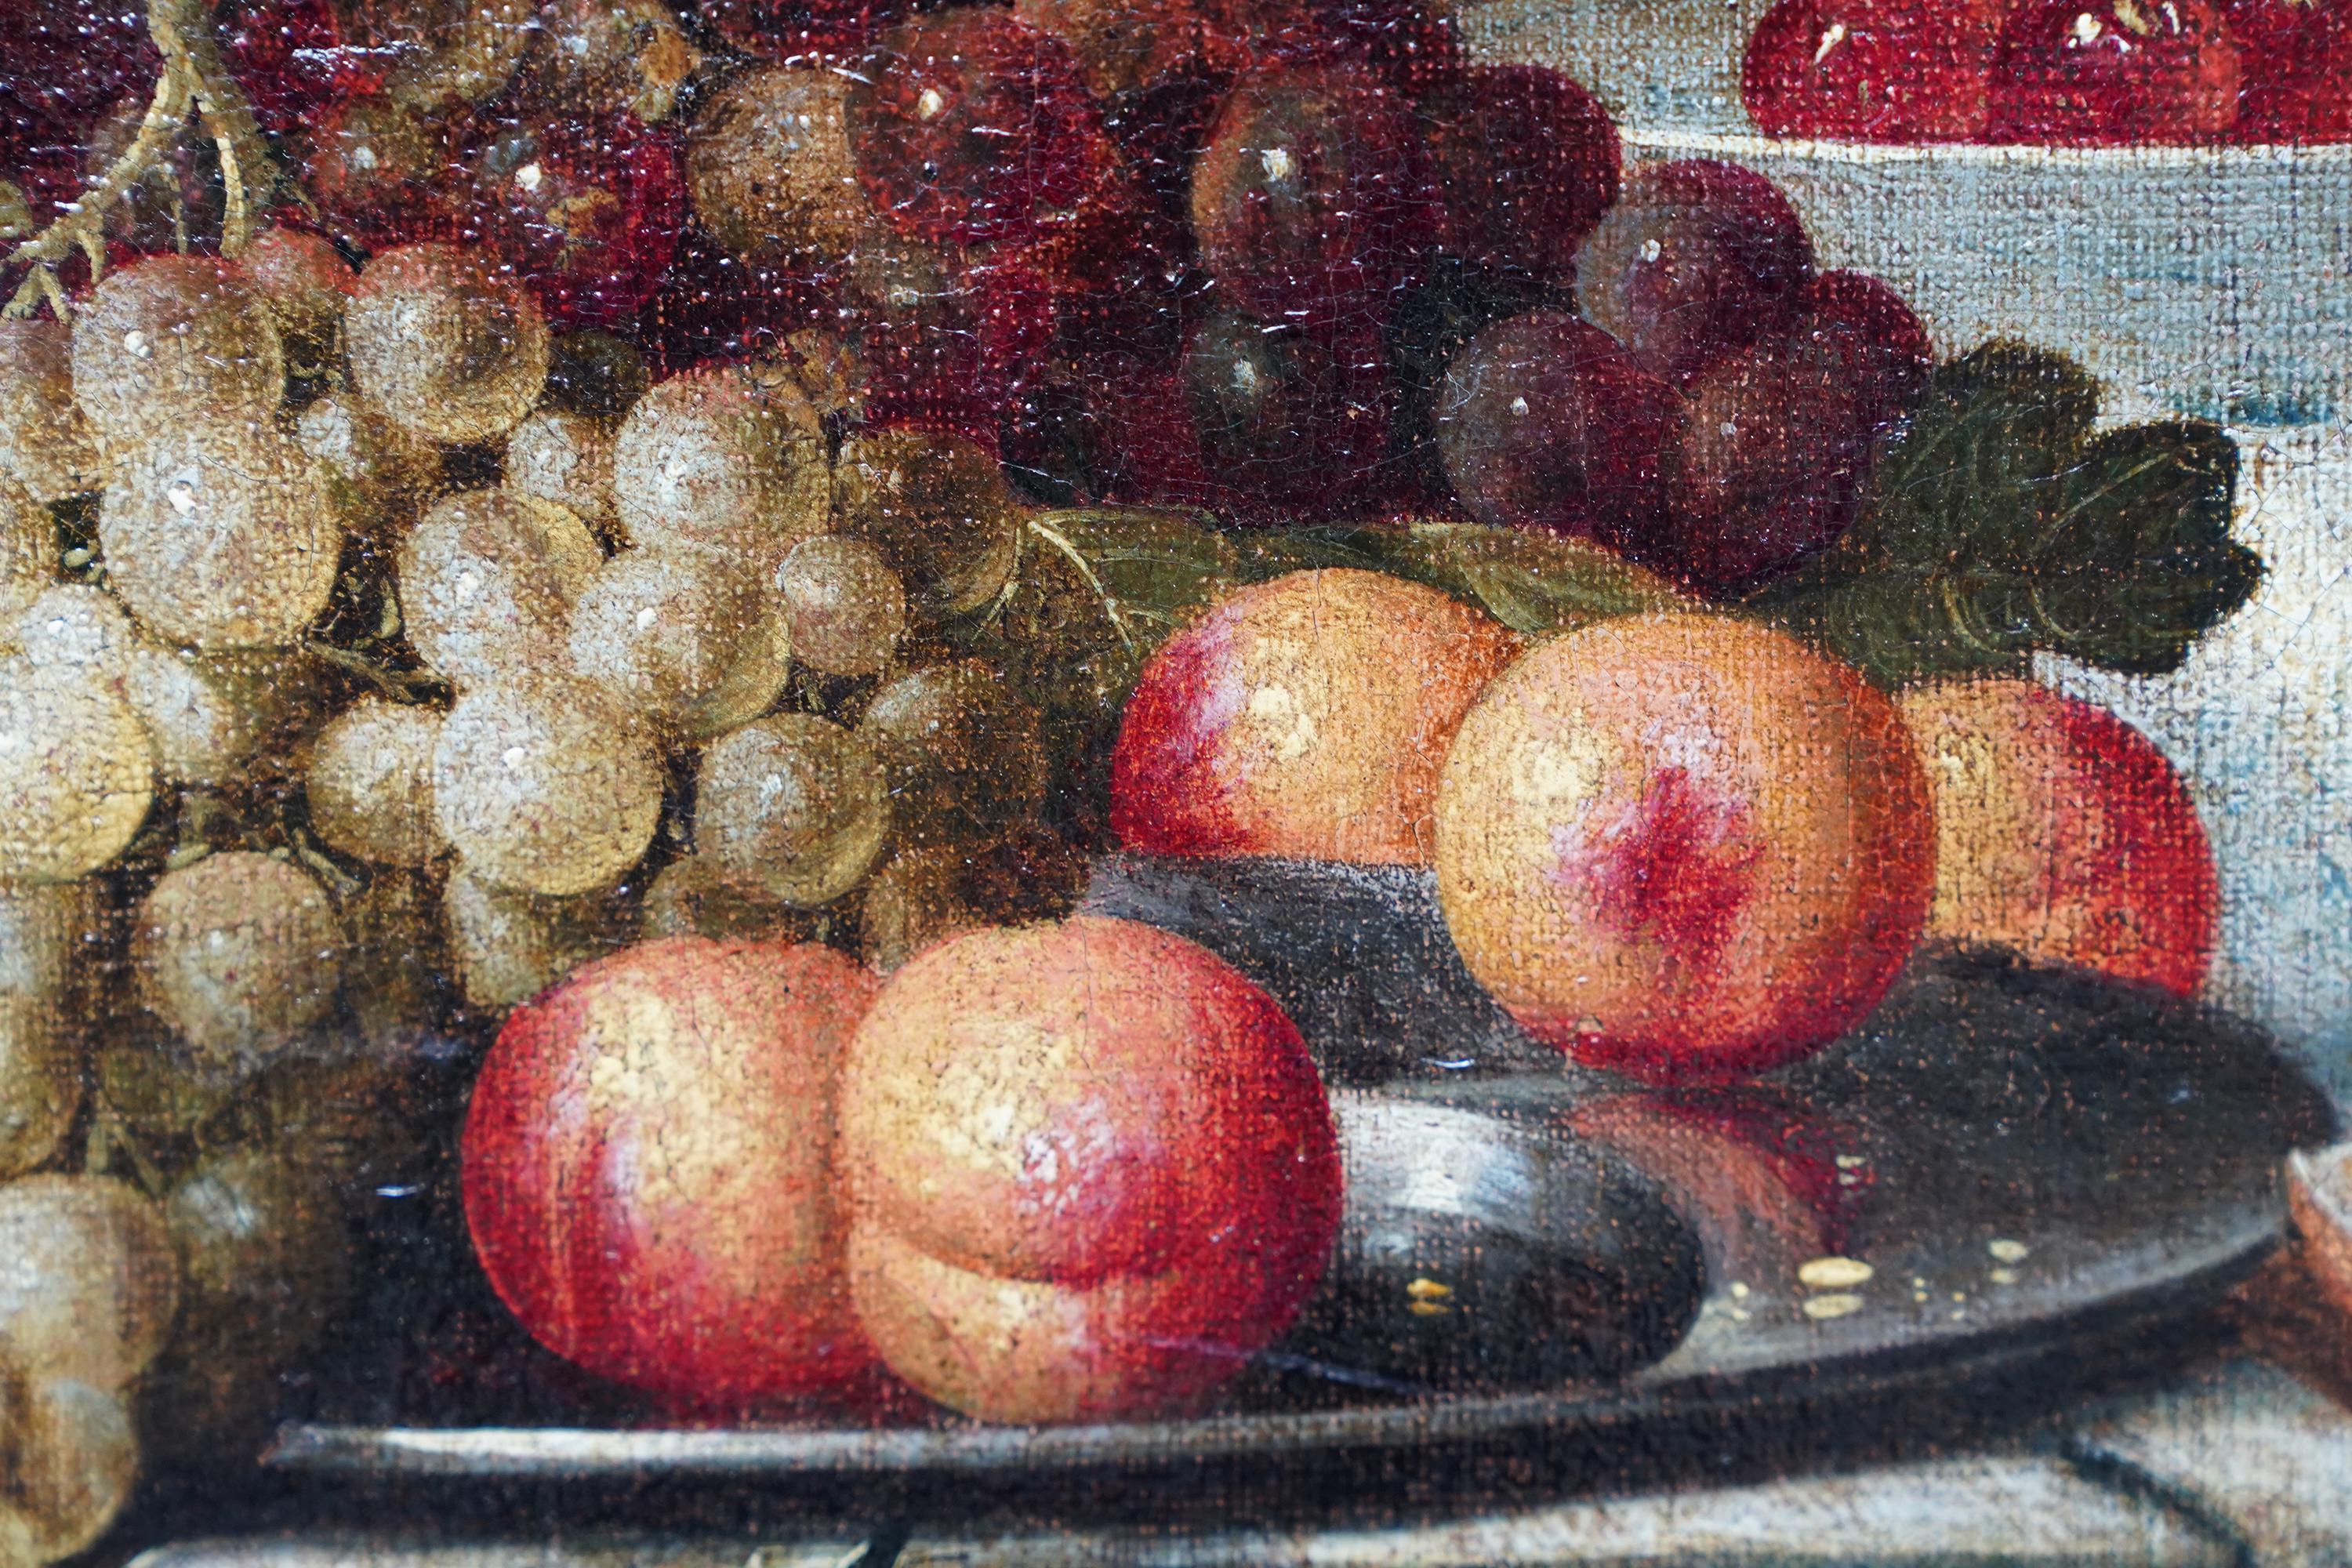 Still Life of Fruit - Dutch 17th century art Old Master still life oil painting - Old Masters Painting by Jan Davidsz De Heem